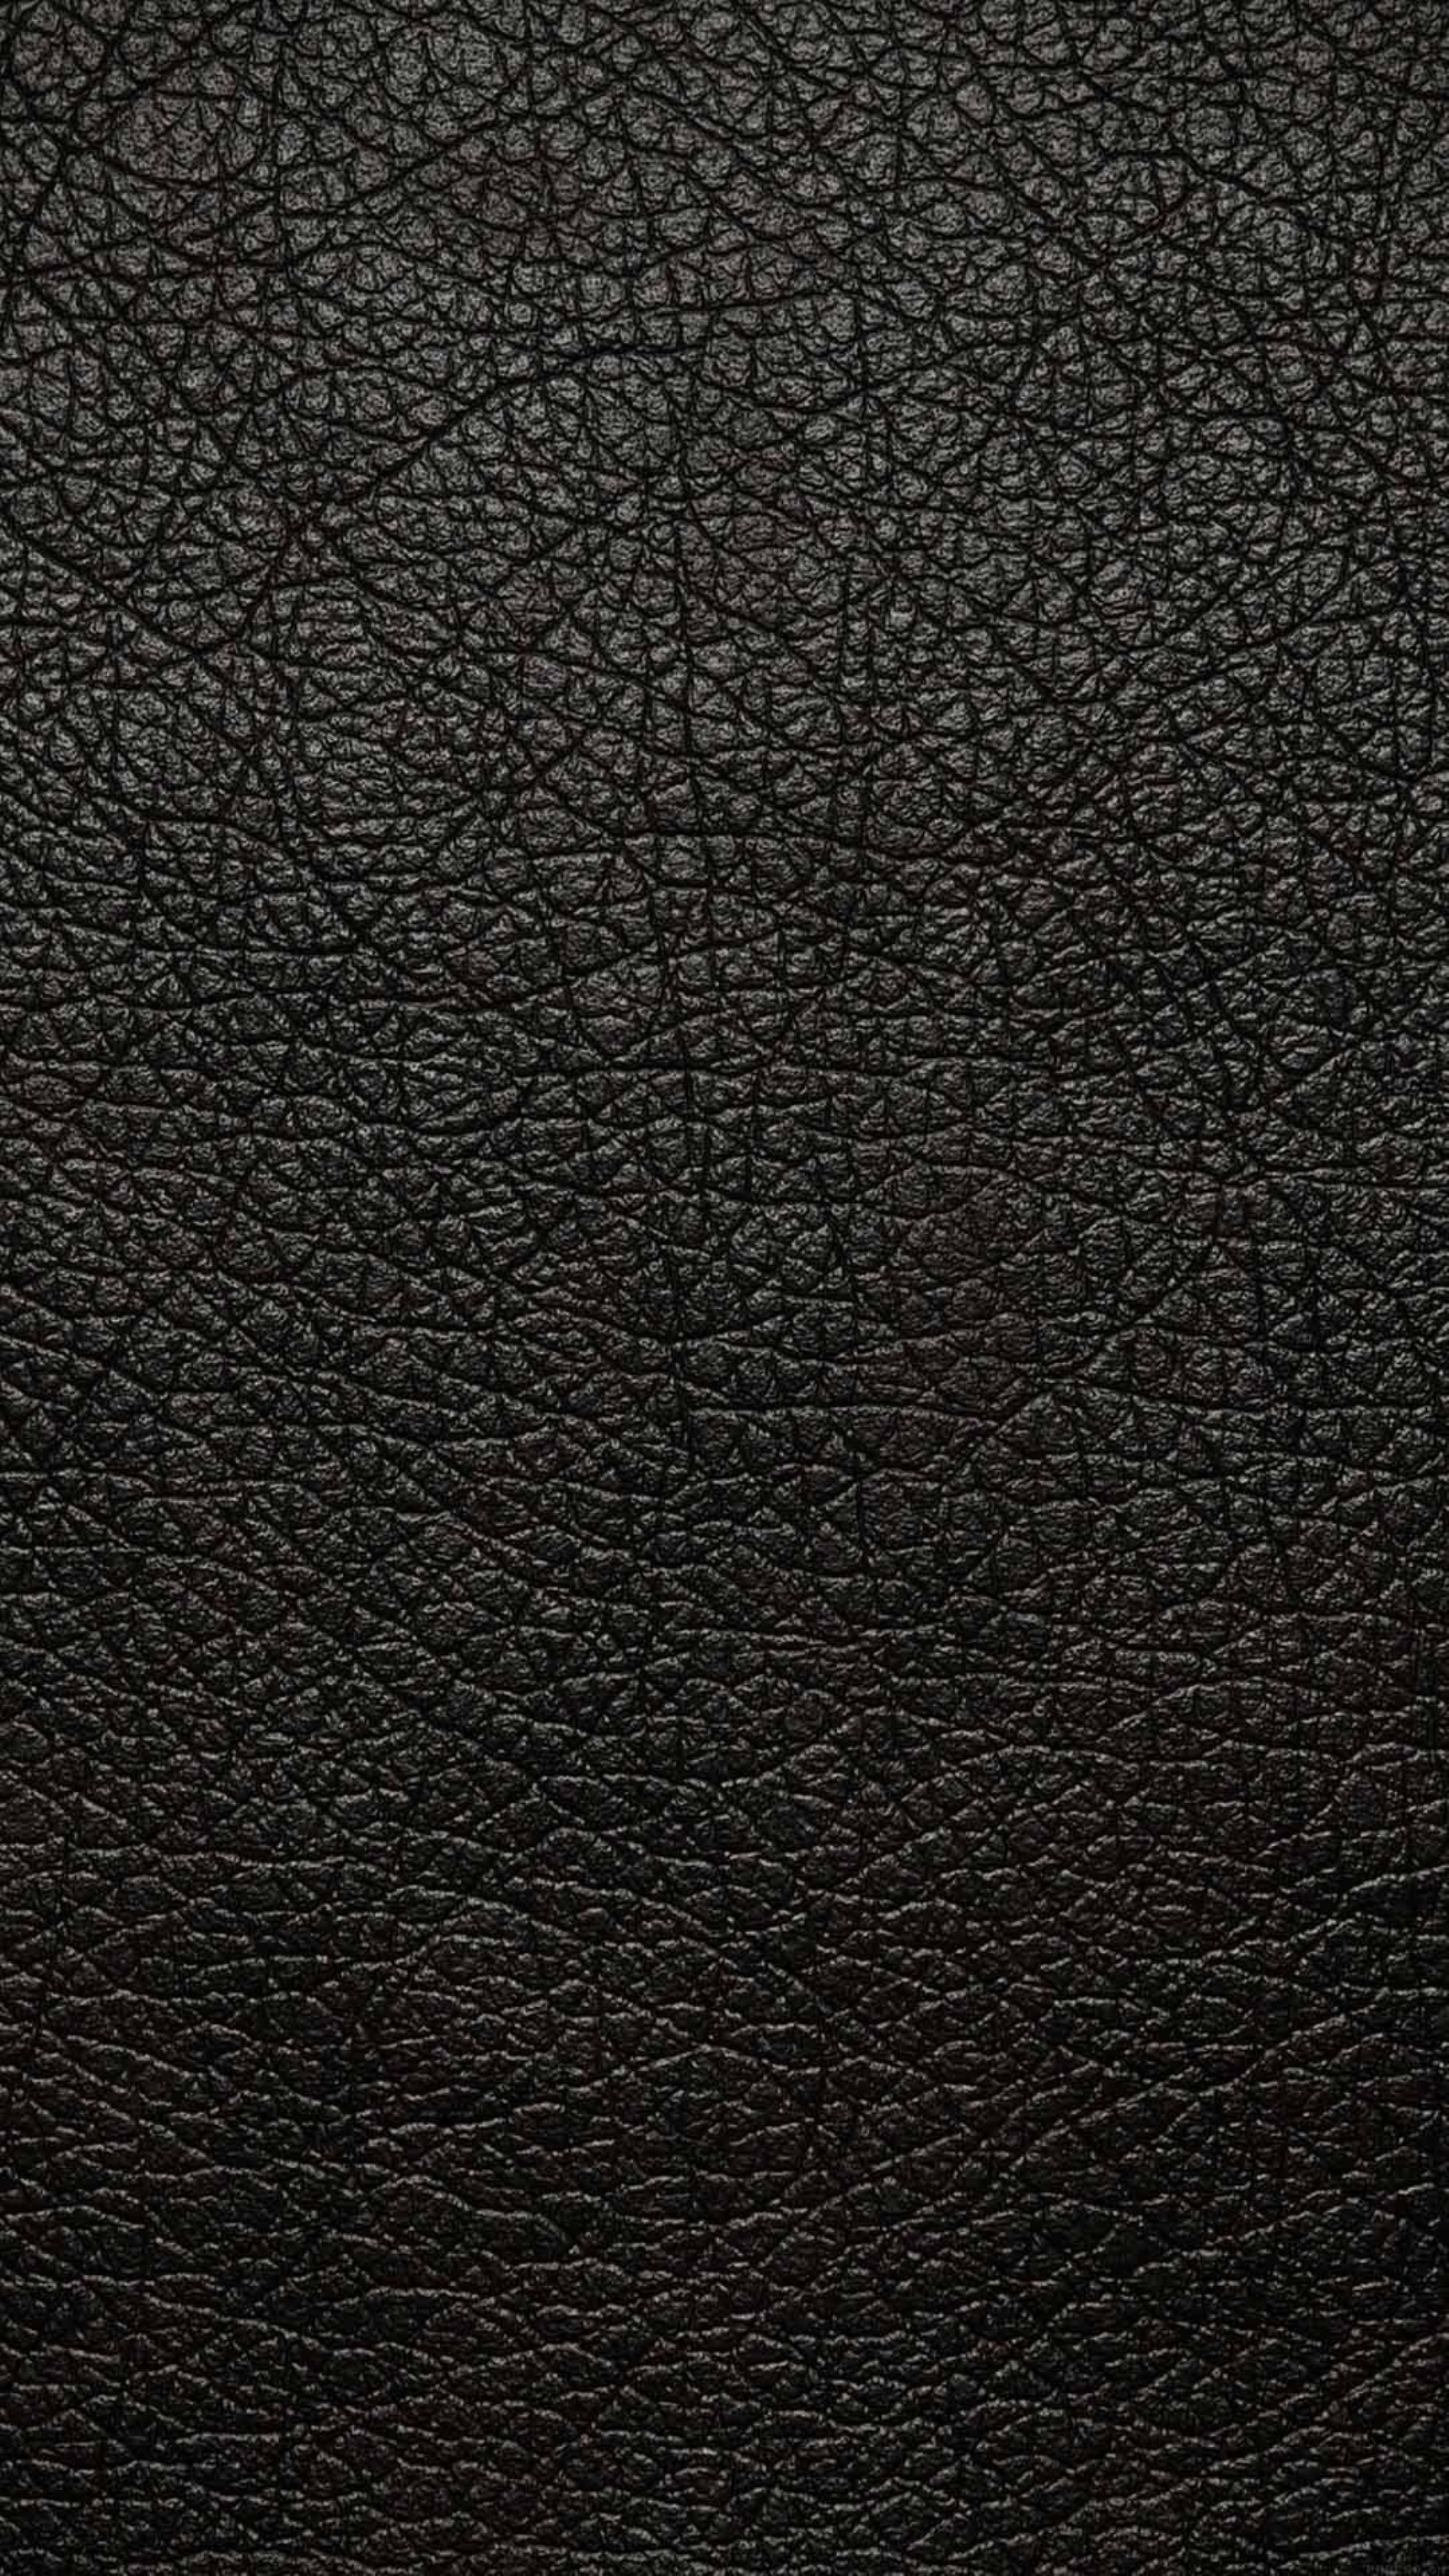 AMOLED Texture Wallpaper. Textured wallpaper, Leather texture